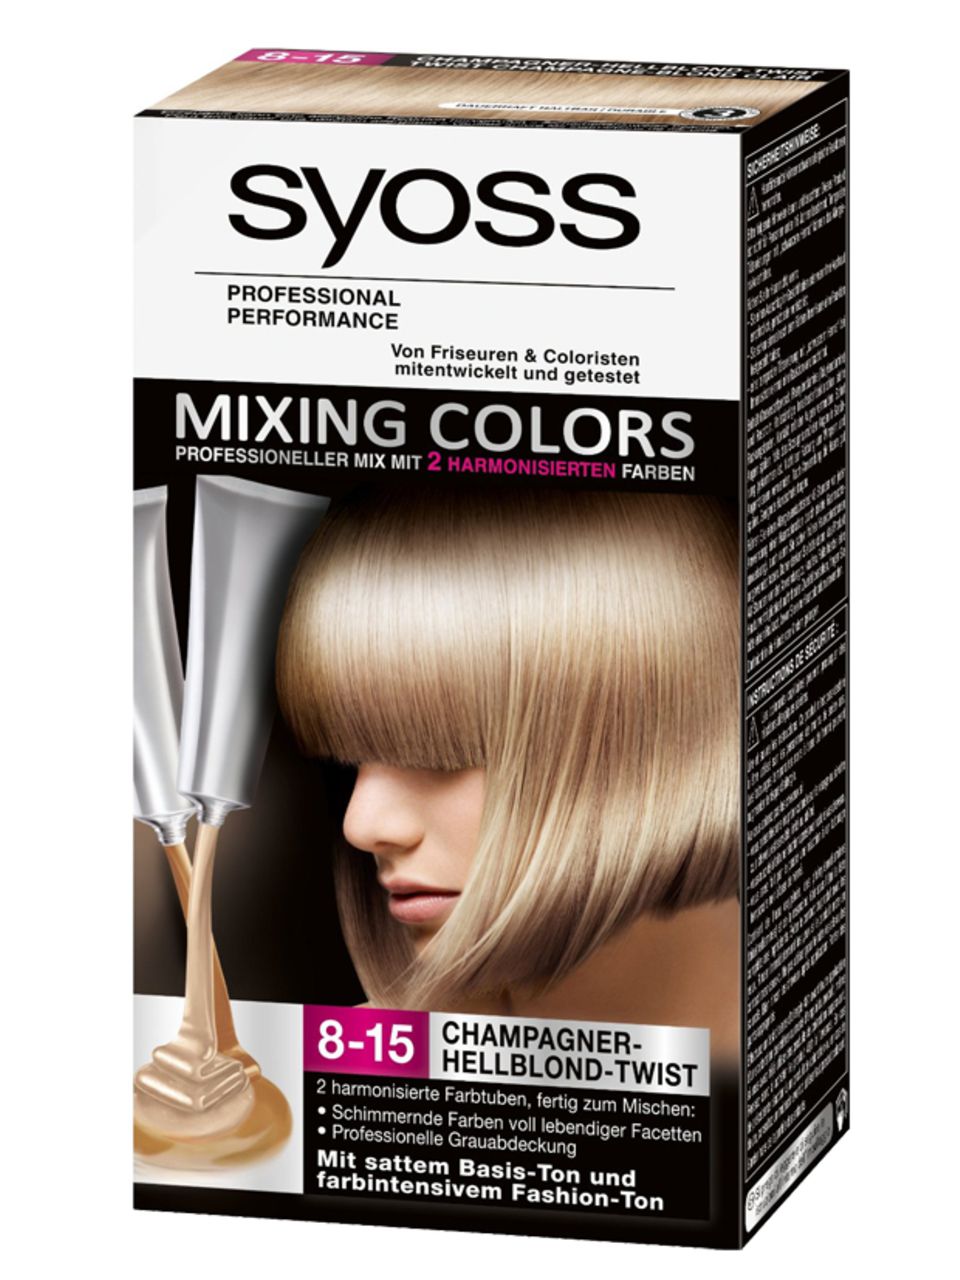 Краска для волос mixing colors 5-25 вишневый коктейль syoss